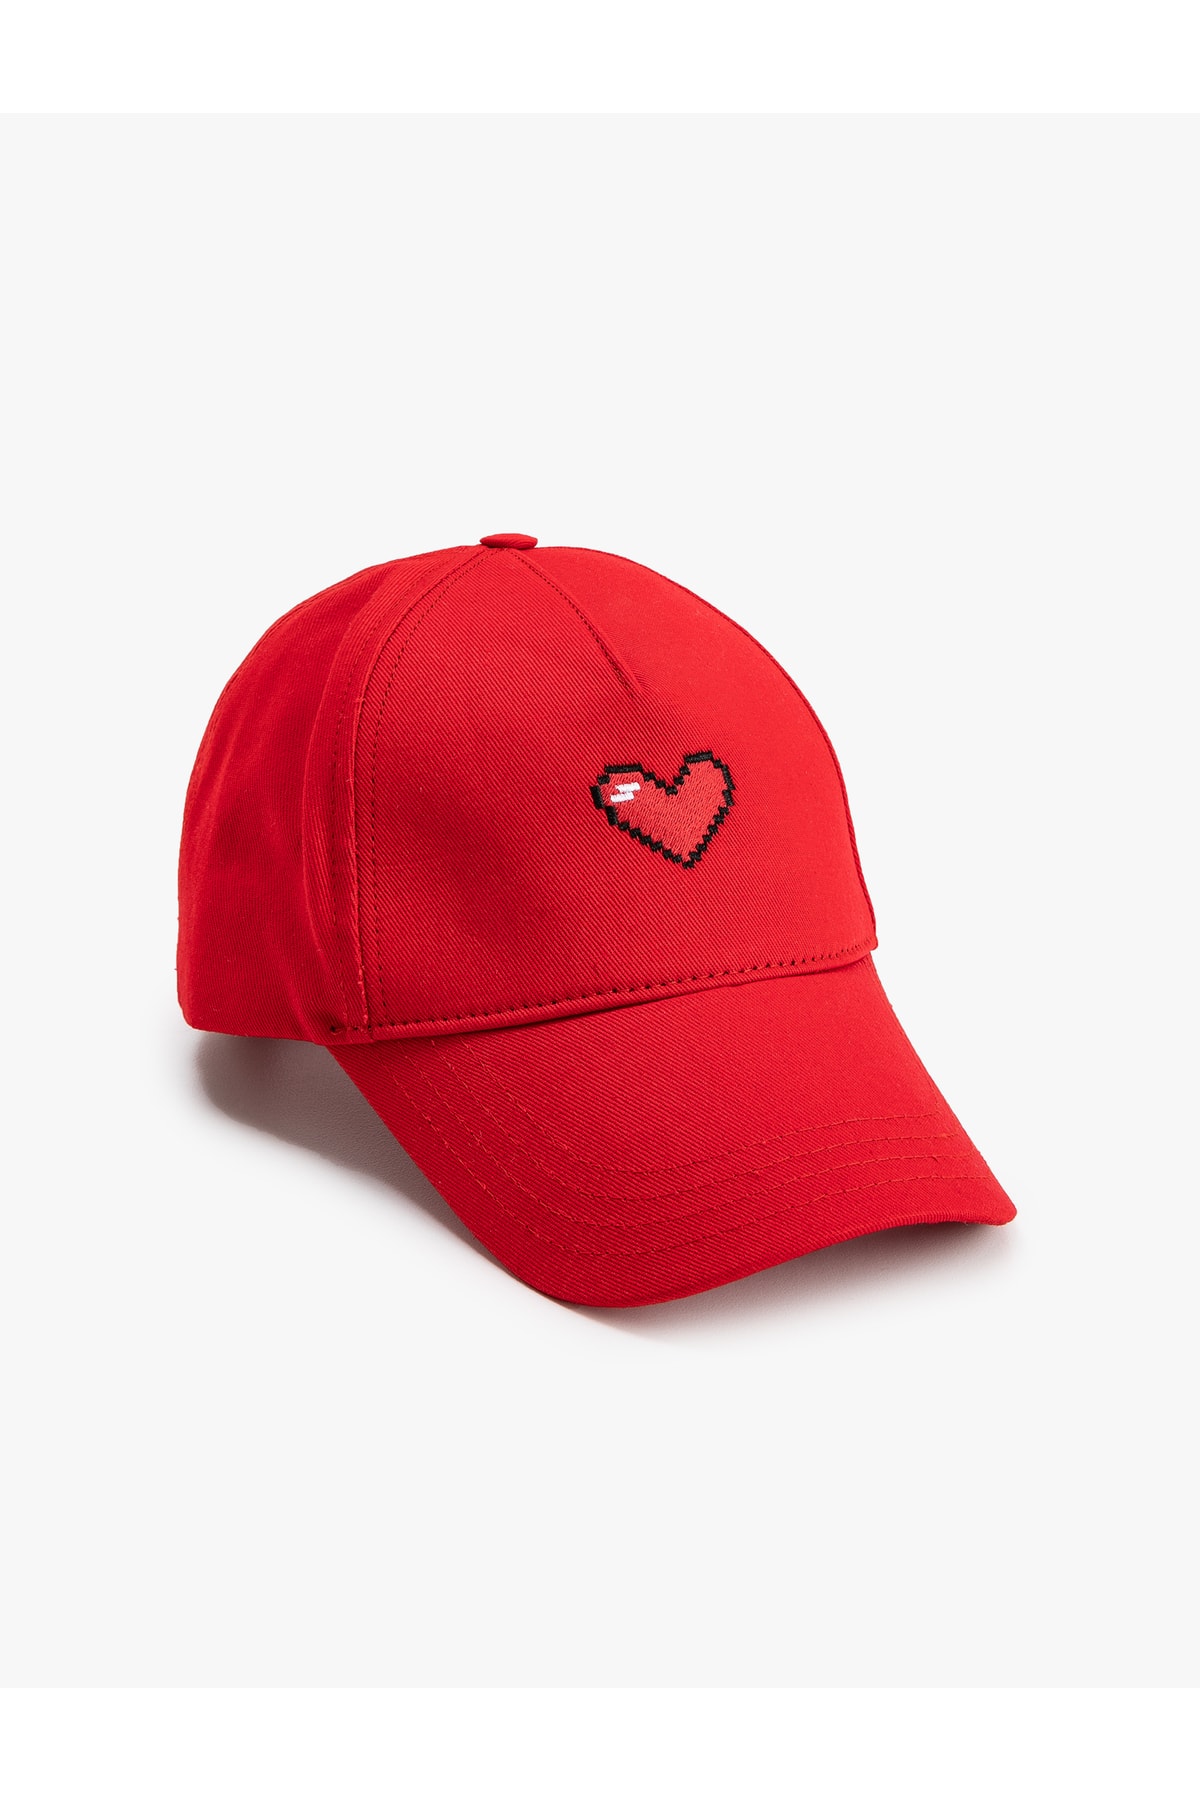 Koton Cap Hats with Heart Shape Adjustable Back Cotton